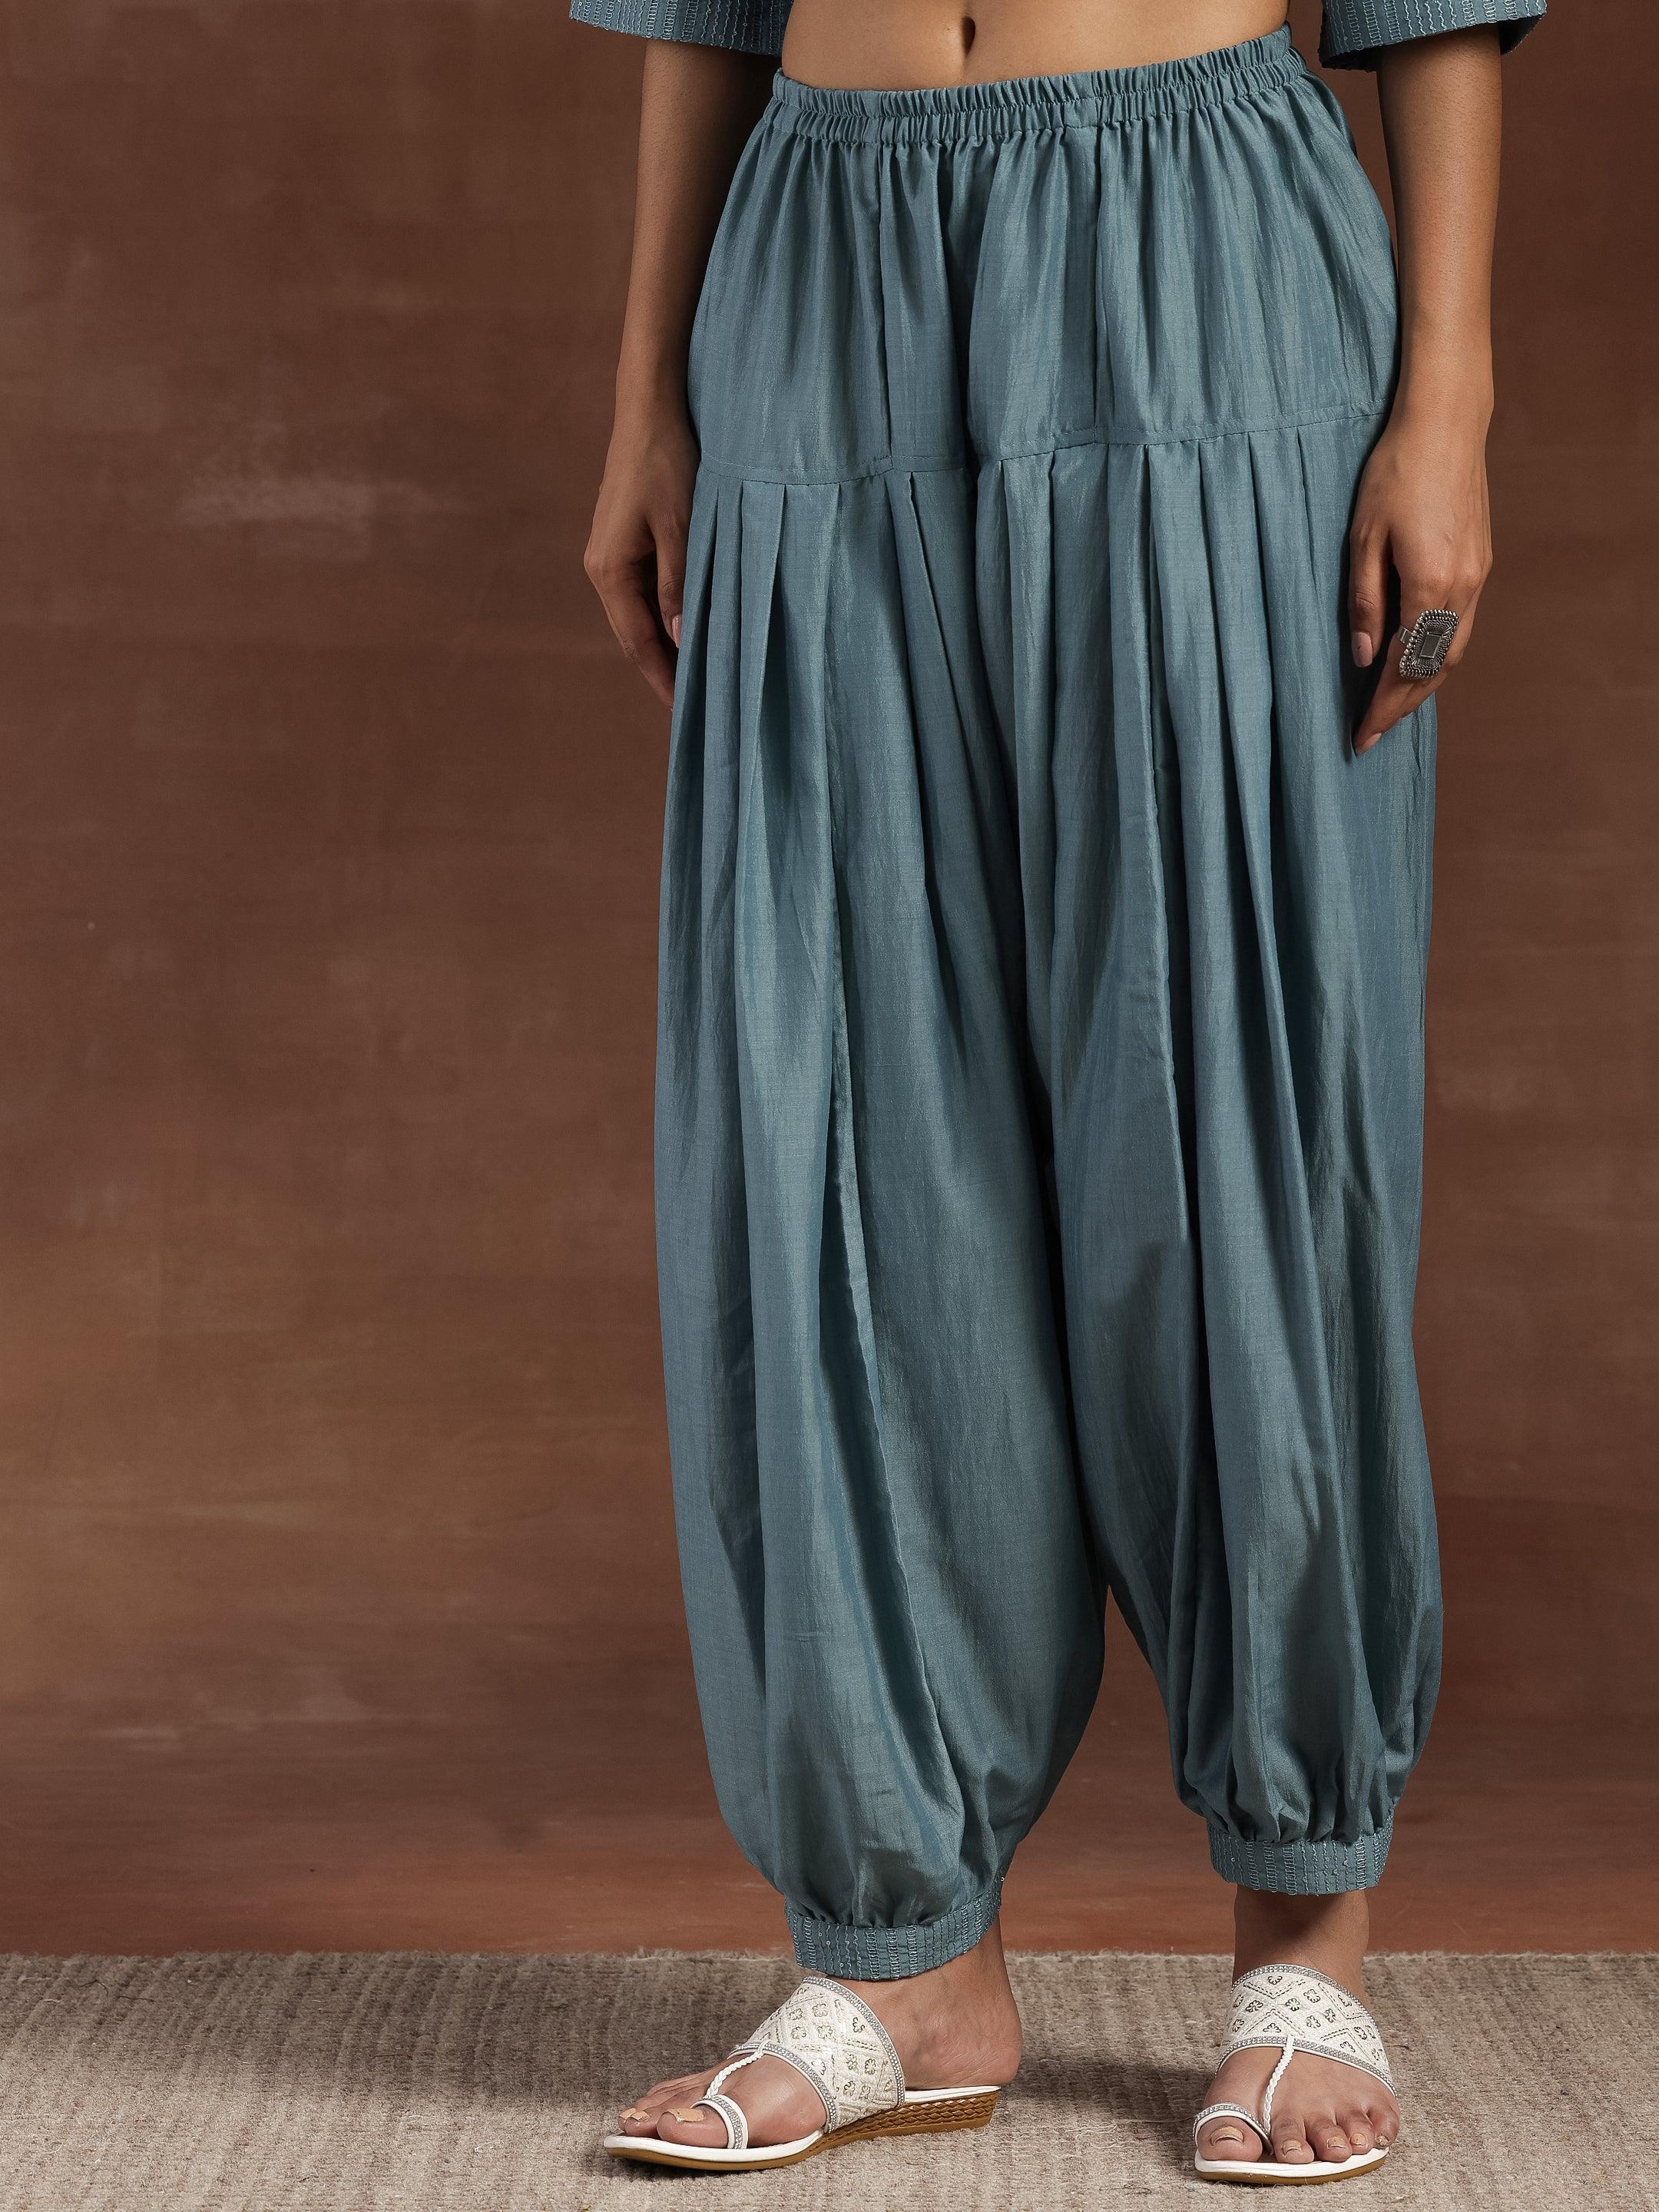 Grey Self Design Silk Blend Straight Suit With Dupatta